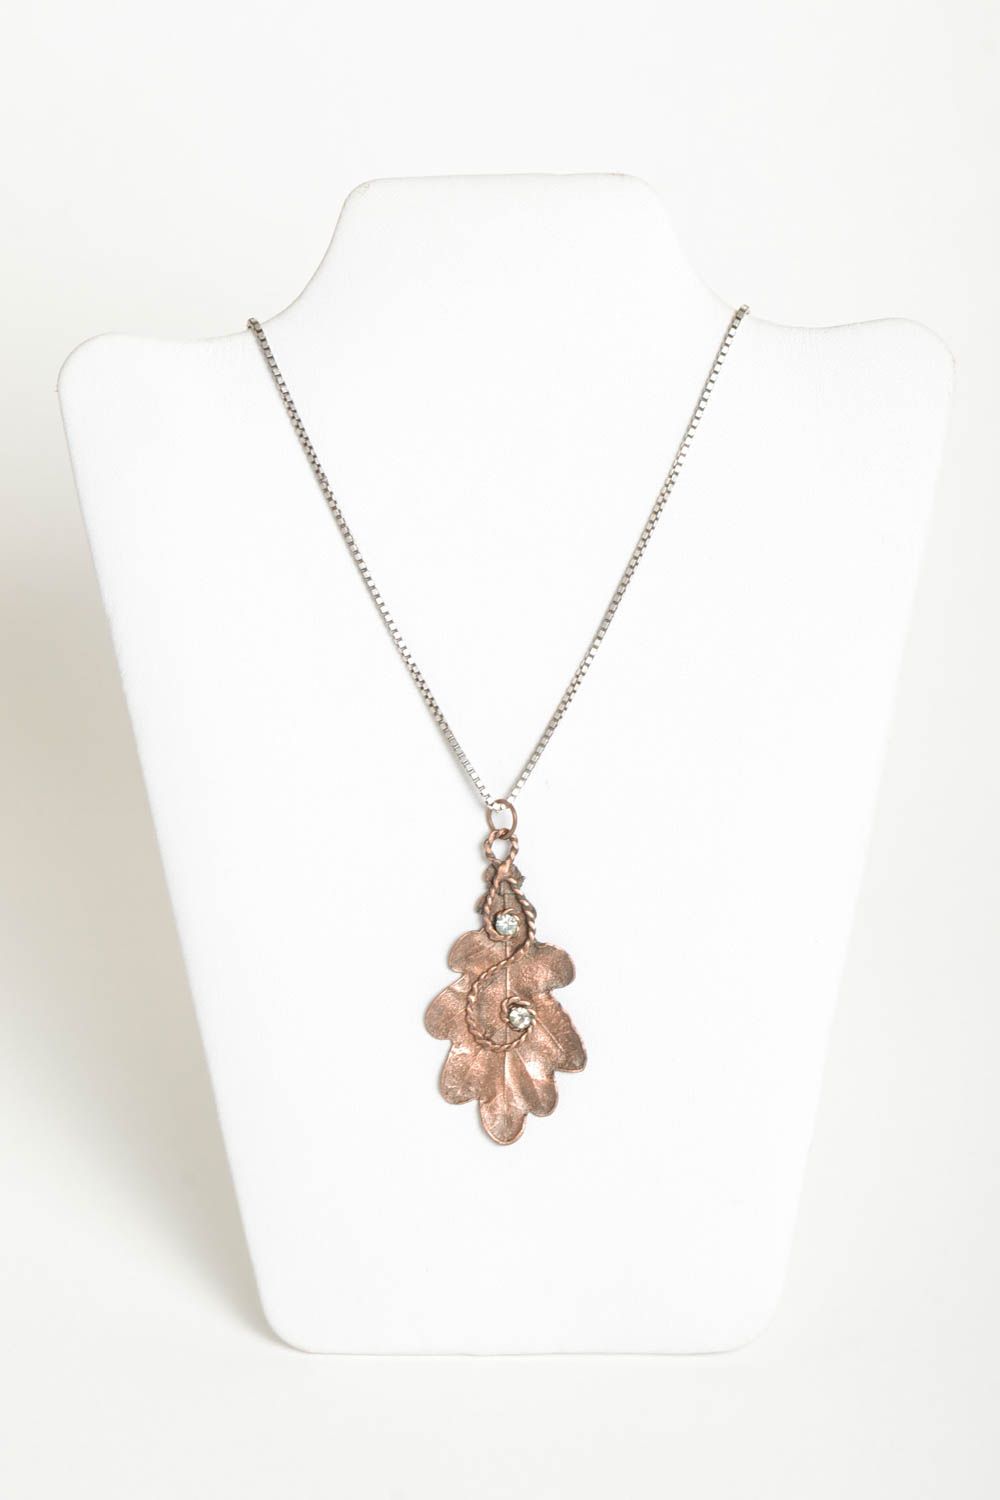 Stylish handmade copper pendant metal jewelry designs fashion trends photo 2